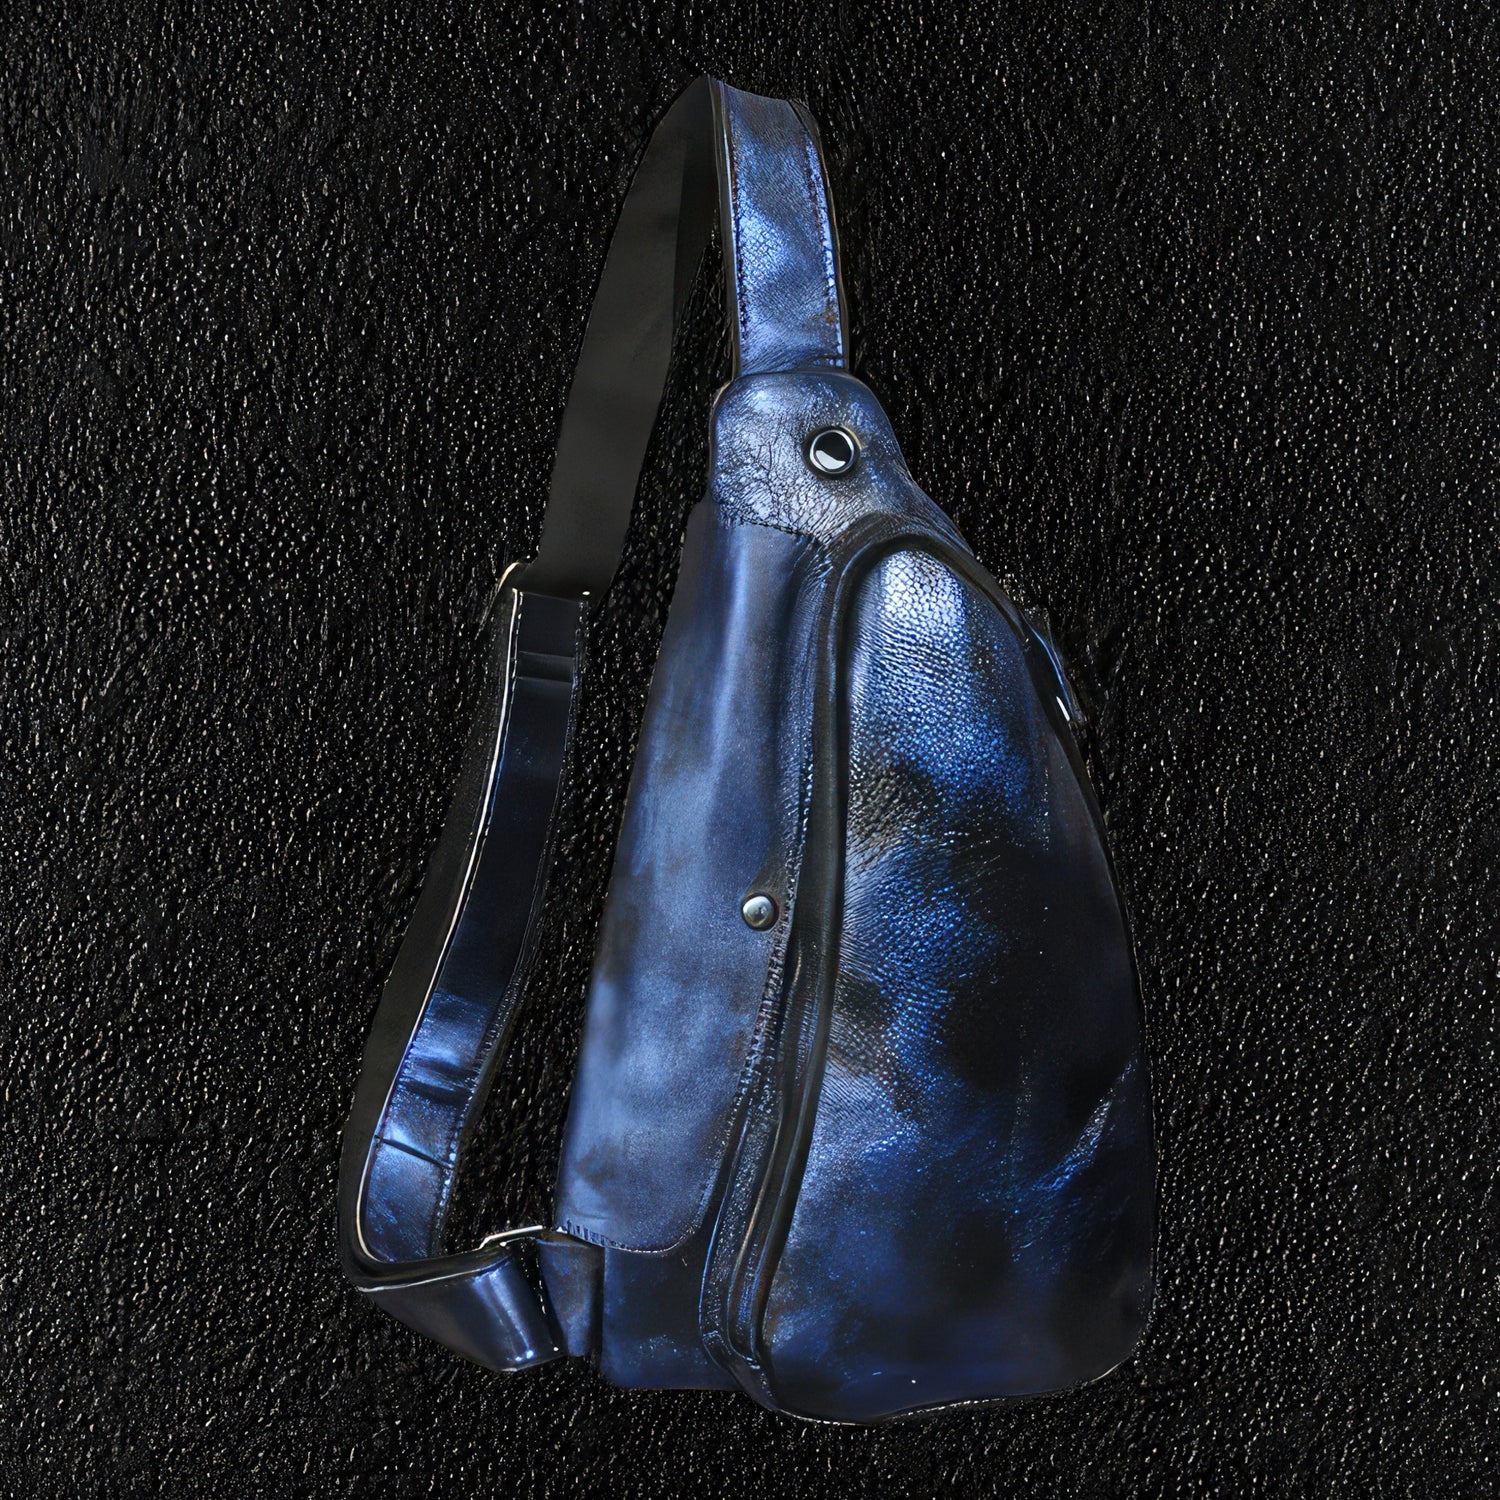 The Blue Blotchy Bag